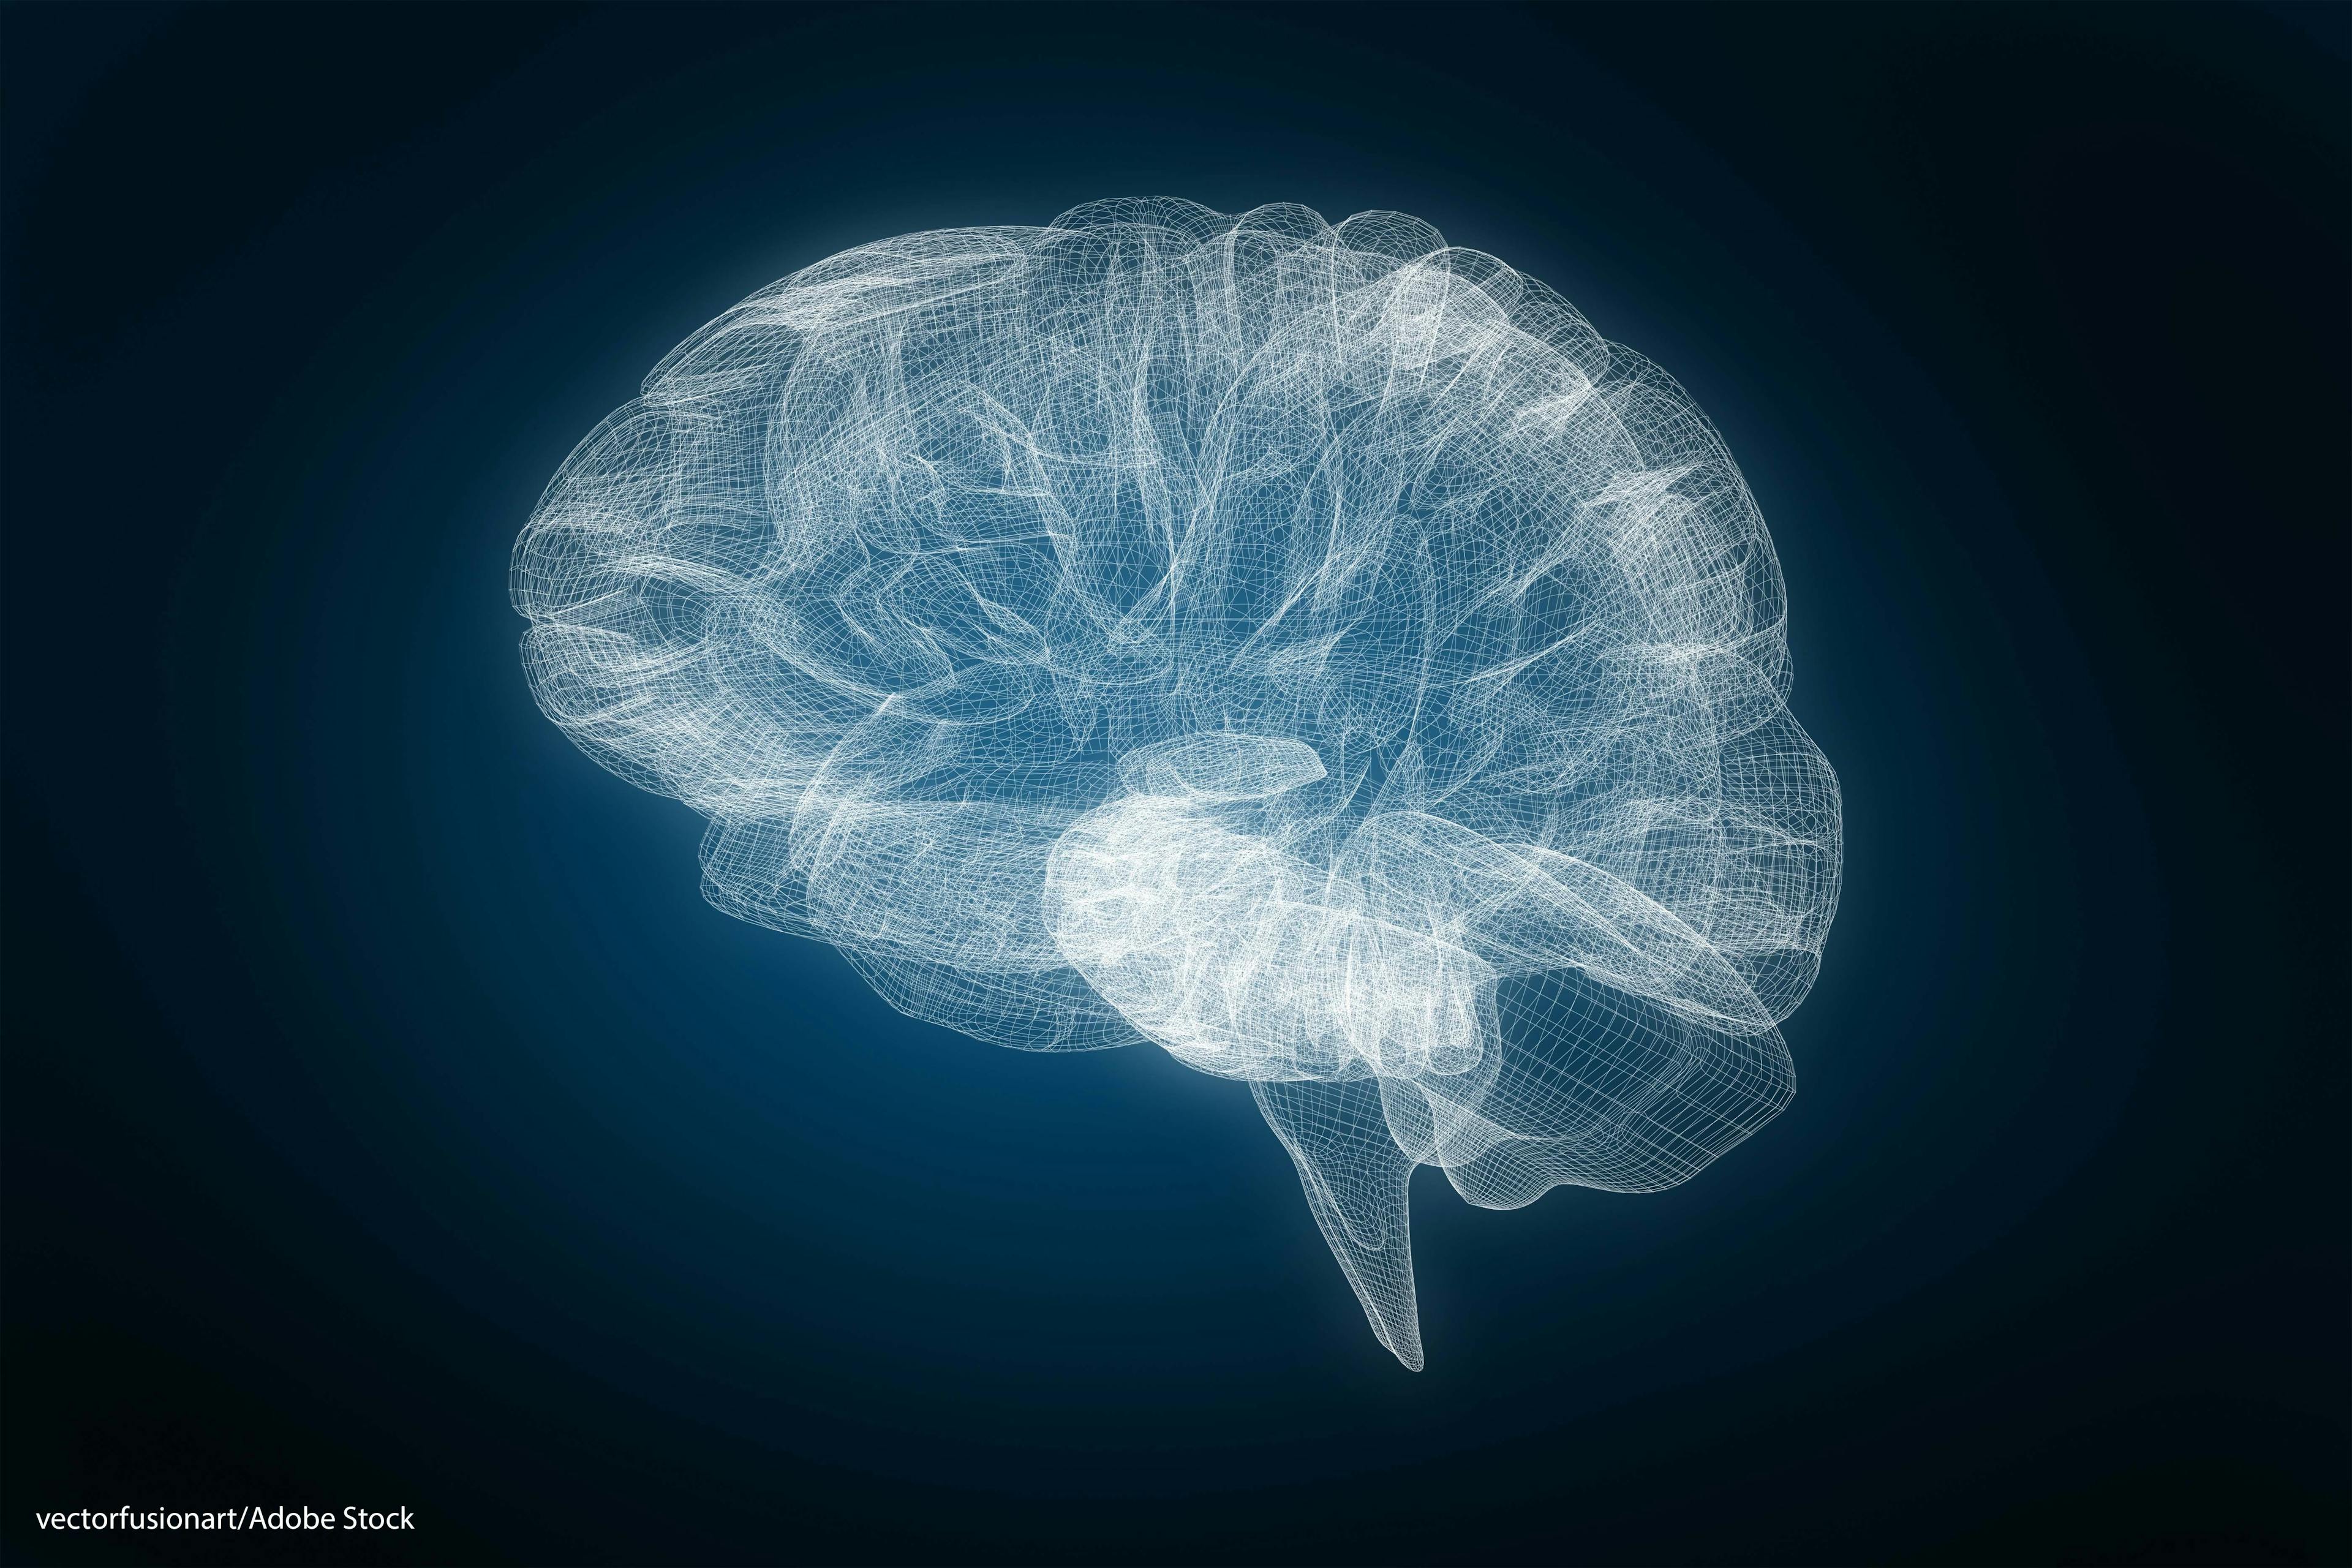 Nivolumab Trial Failure Raises the Question of Brain Imaging in Kidney Cancer